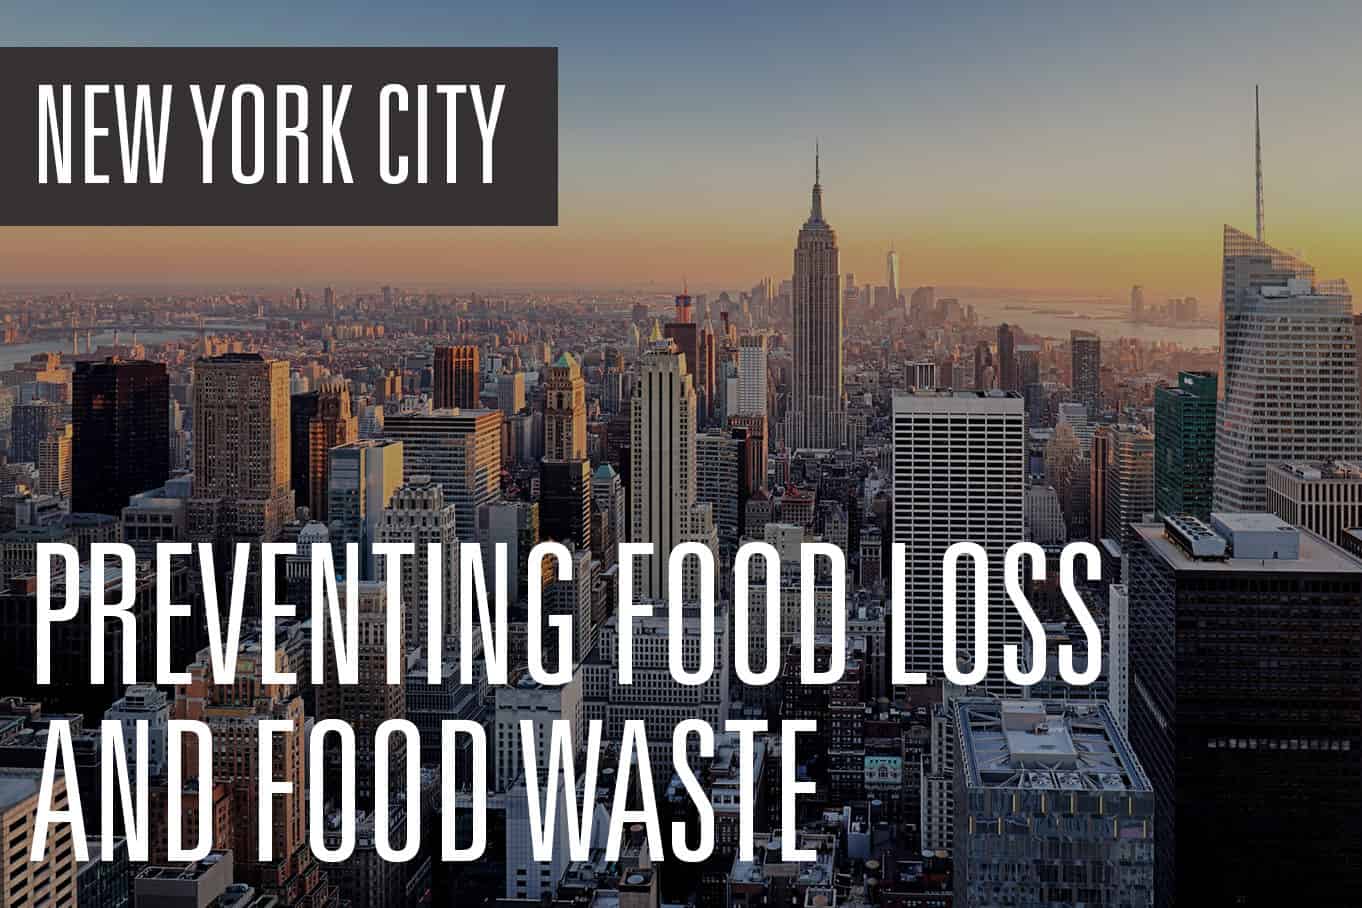 w88优德老虎机平台食品罐,与芬克家族基金会和蓝山餐厅举办一个亲密的晚餐讨论食物浪费的解决办法。